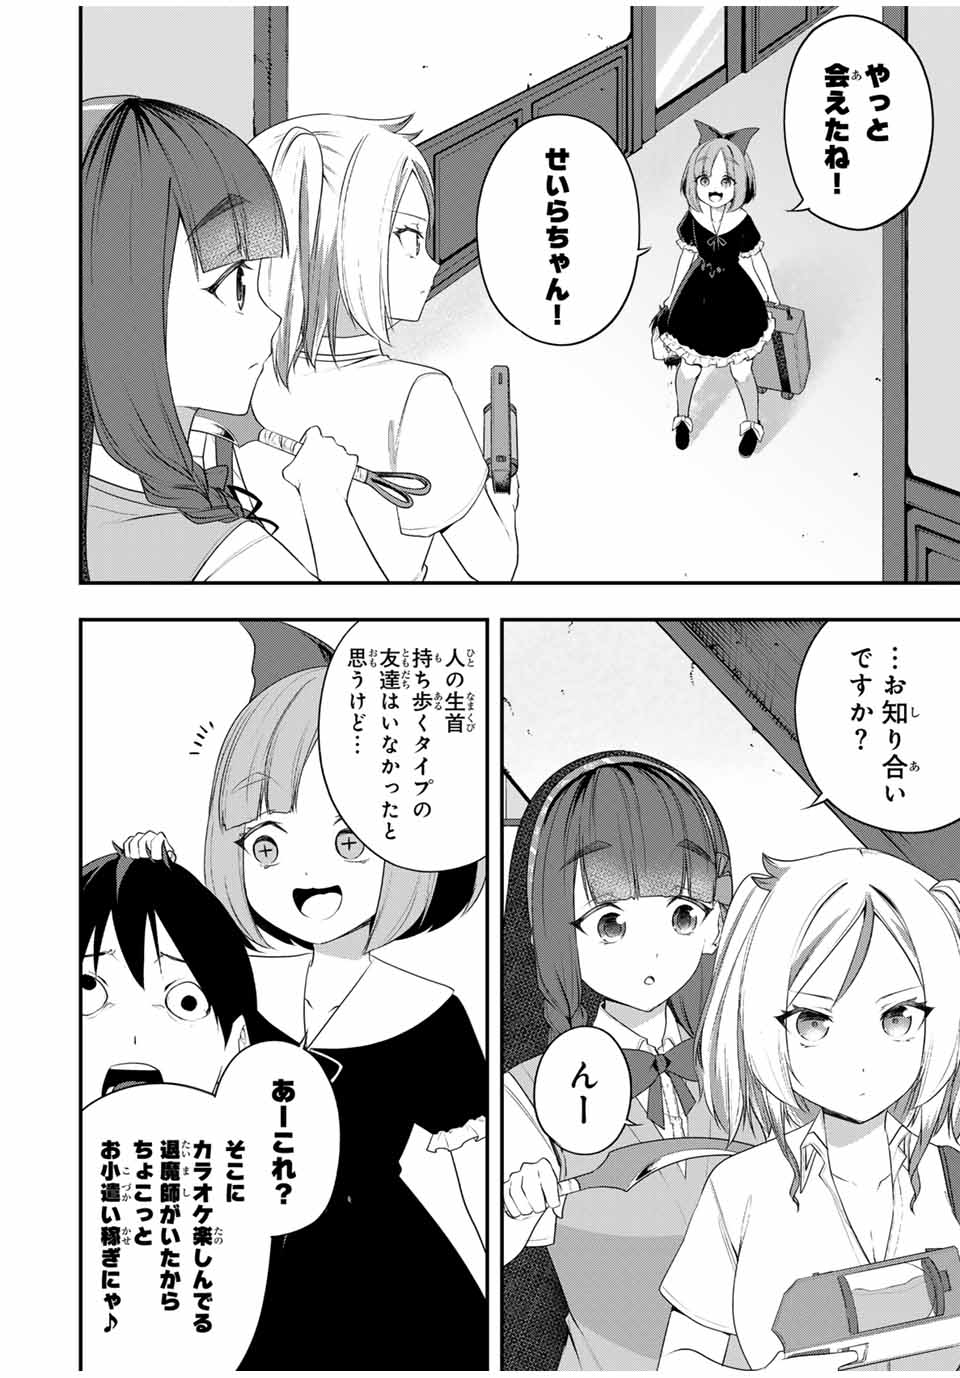 Heroine wa xx Okasegitai - Chapter 14 - Page 6